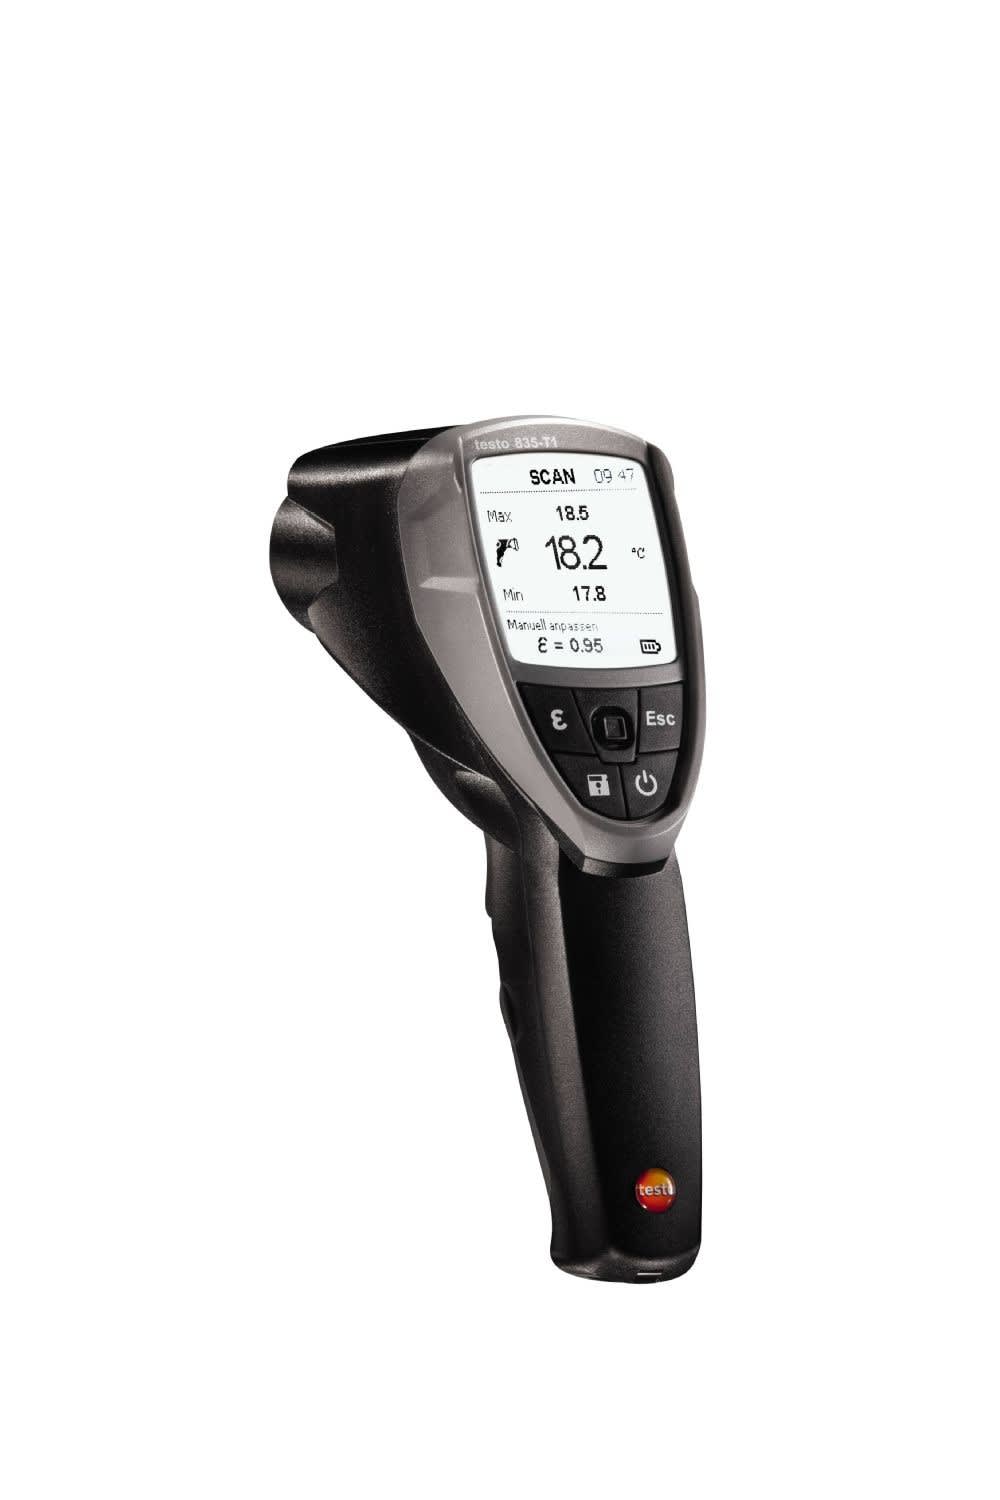 TESTO - testo 835-T1 - Thermometre infrarouge (jusqu'a 600C)